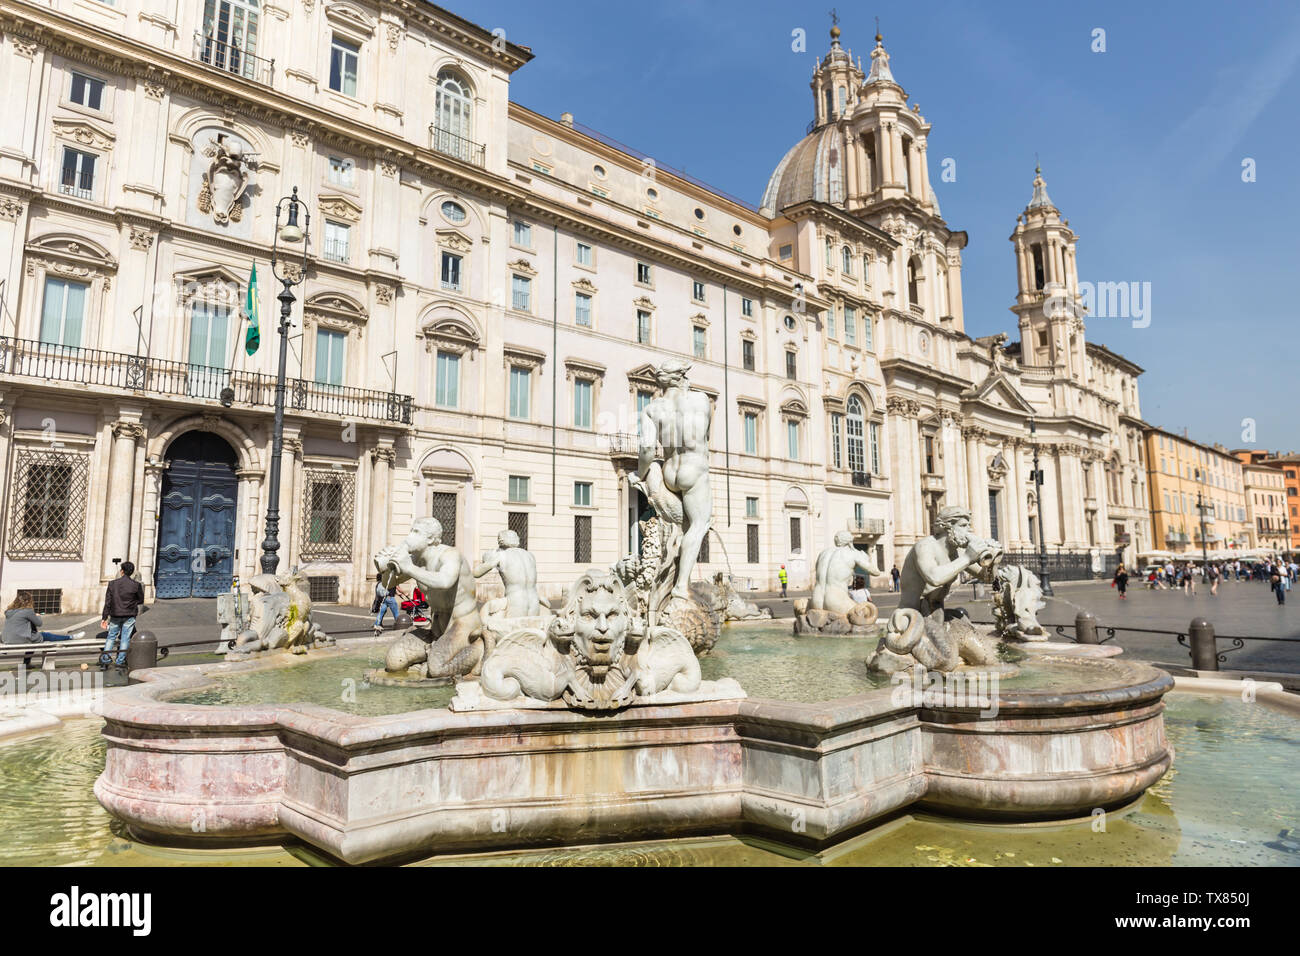 ROME, ITALY - APRIL 24, 2019: The Moor Fountain (Italian: Fontana del Moro) in Navona Square. Stock Photo